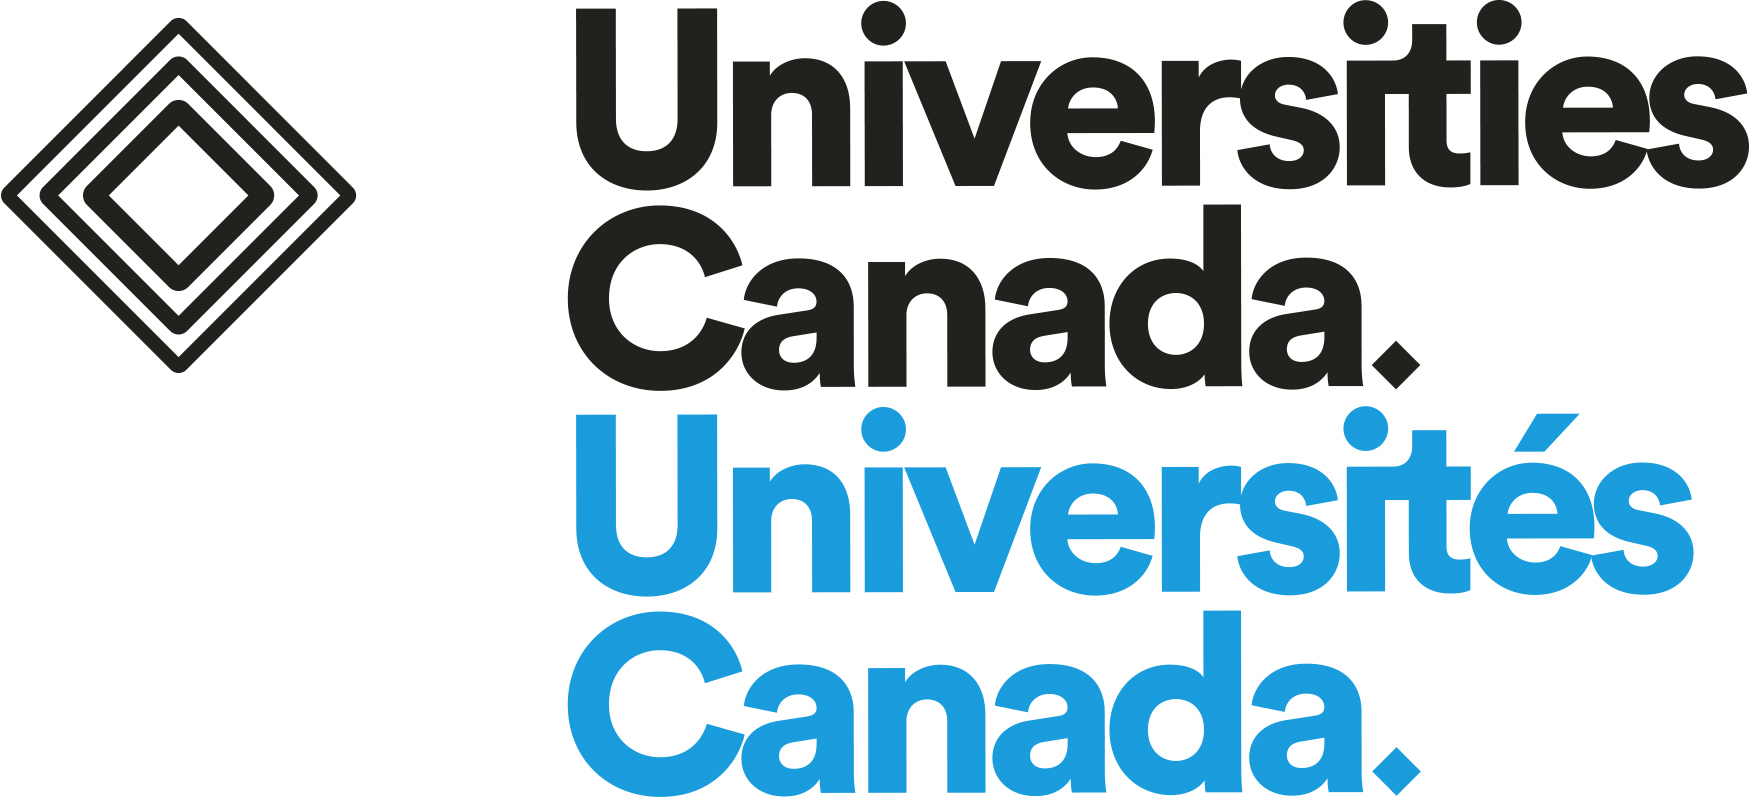 creative writing universities in canada